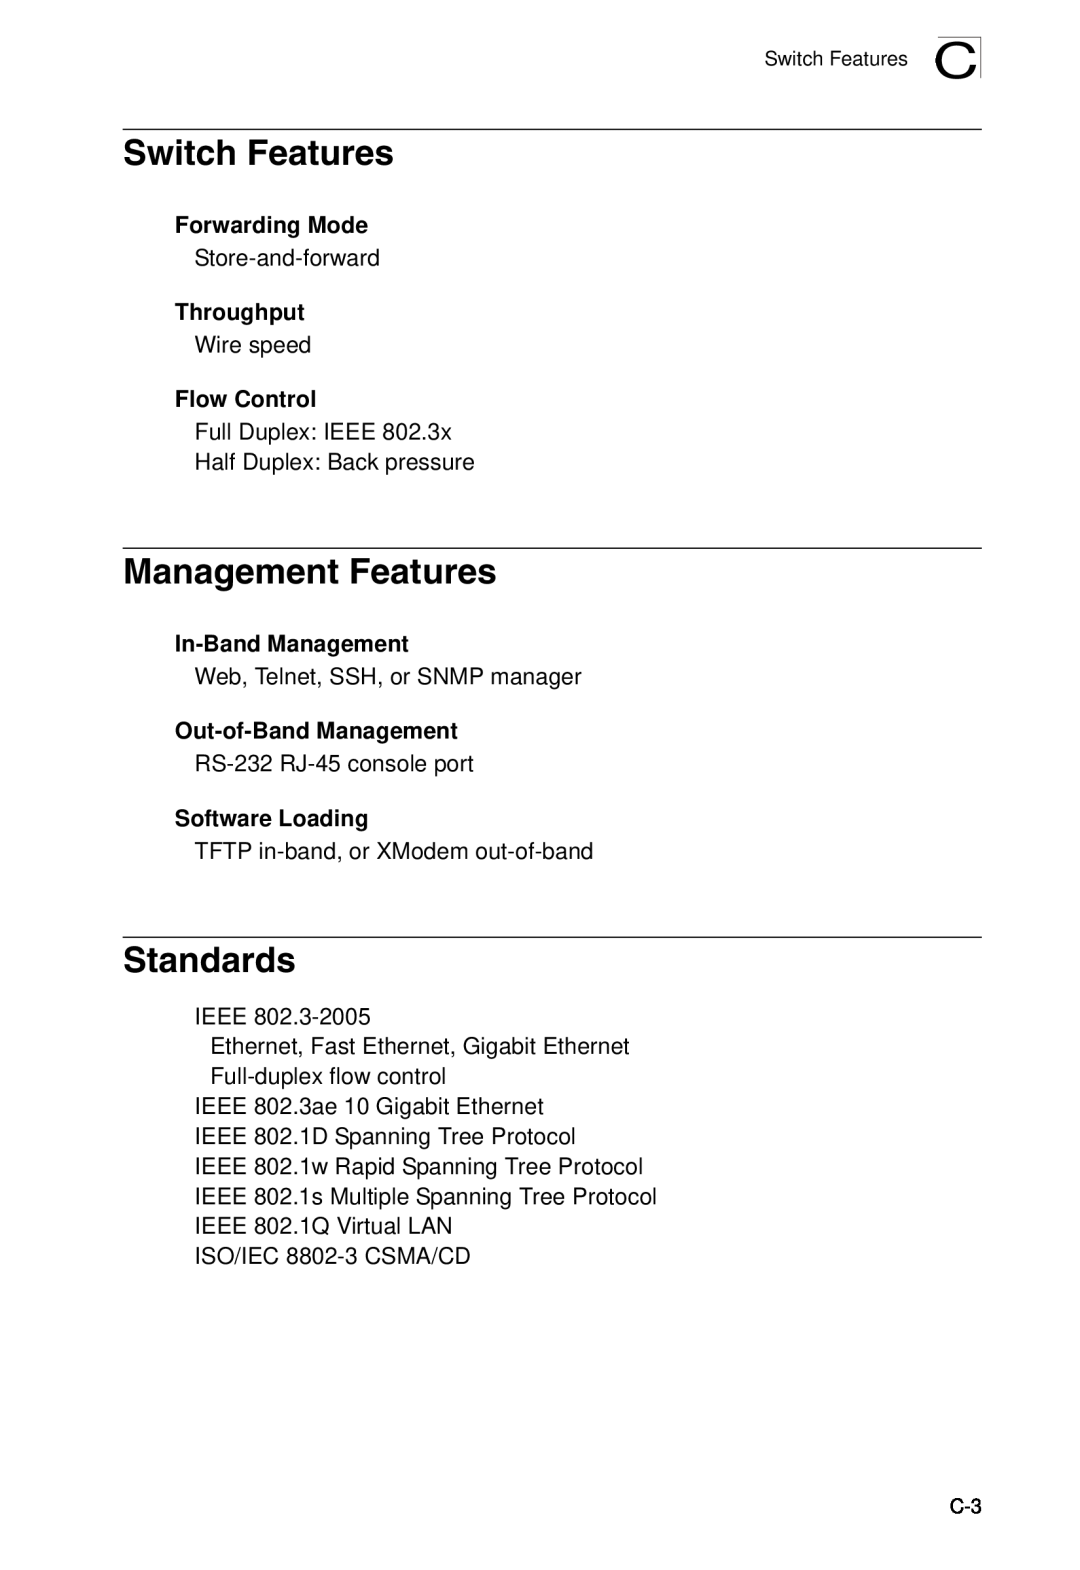 SMC Networks SMC8950EM manual Switch Features, Management Features, Standards, Forwarding Mode, Throughput, Flow Control 